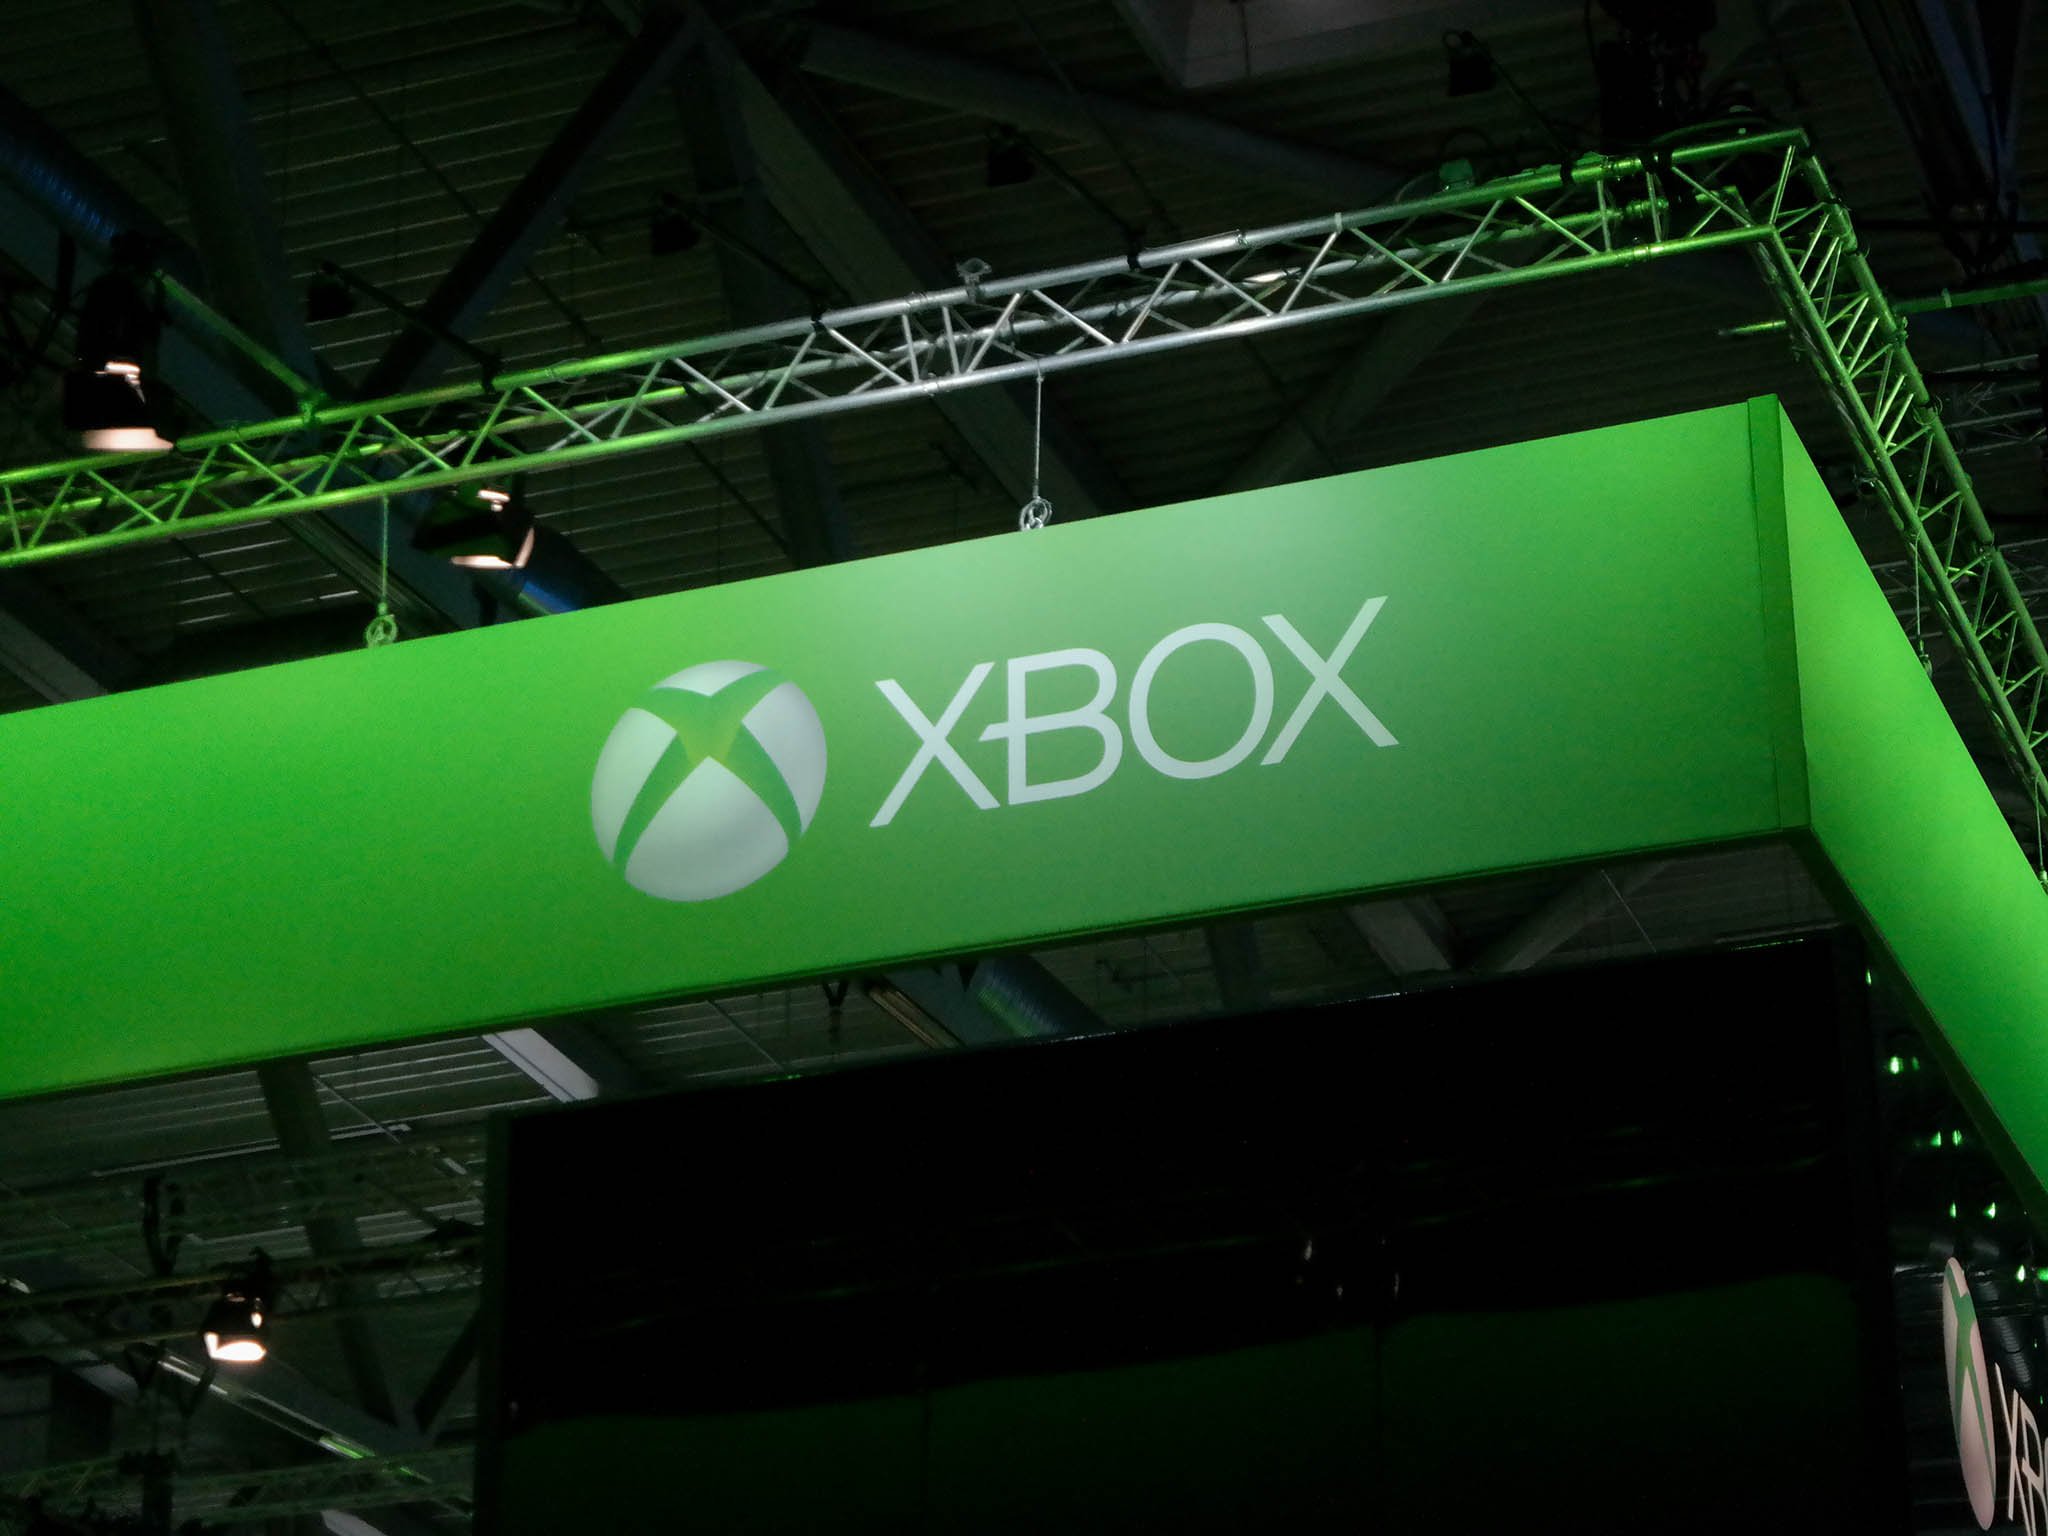 Xbox Game Studios list: All Microsoft studios and upcoming Xbox studio games